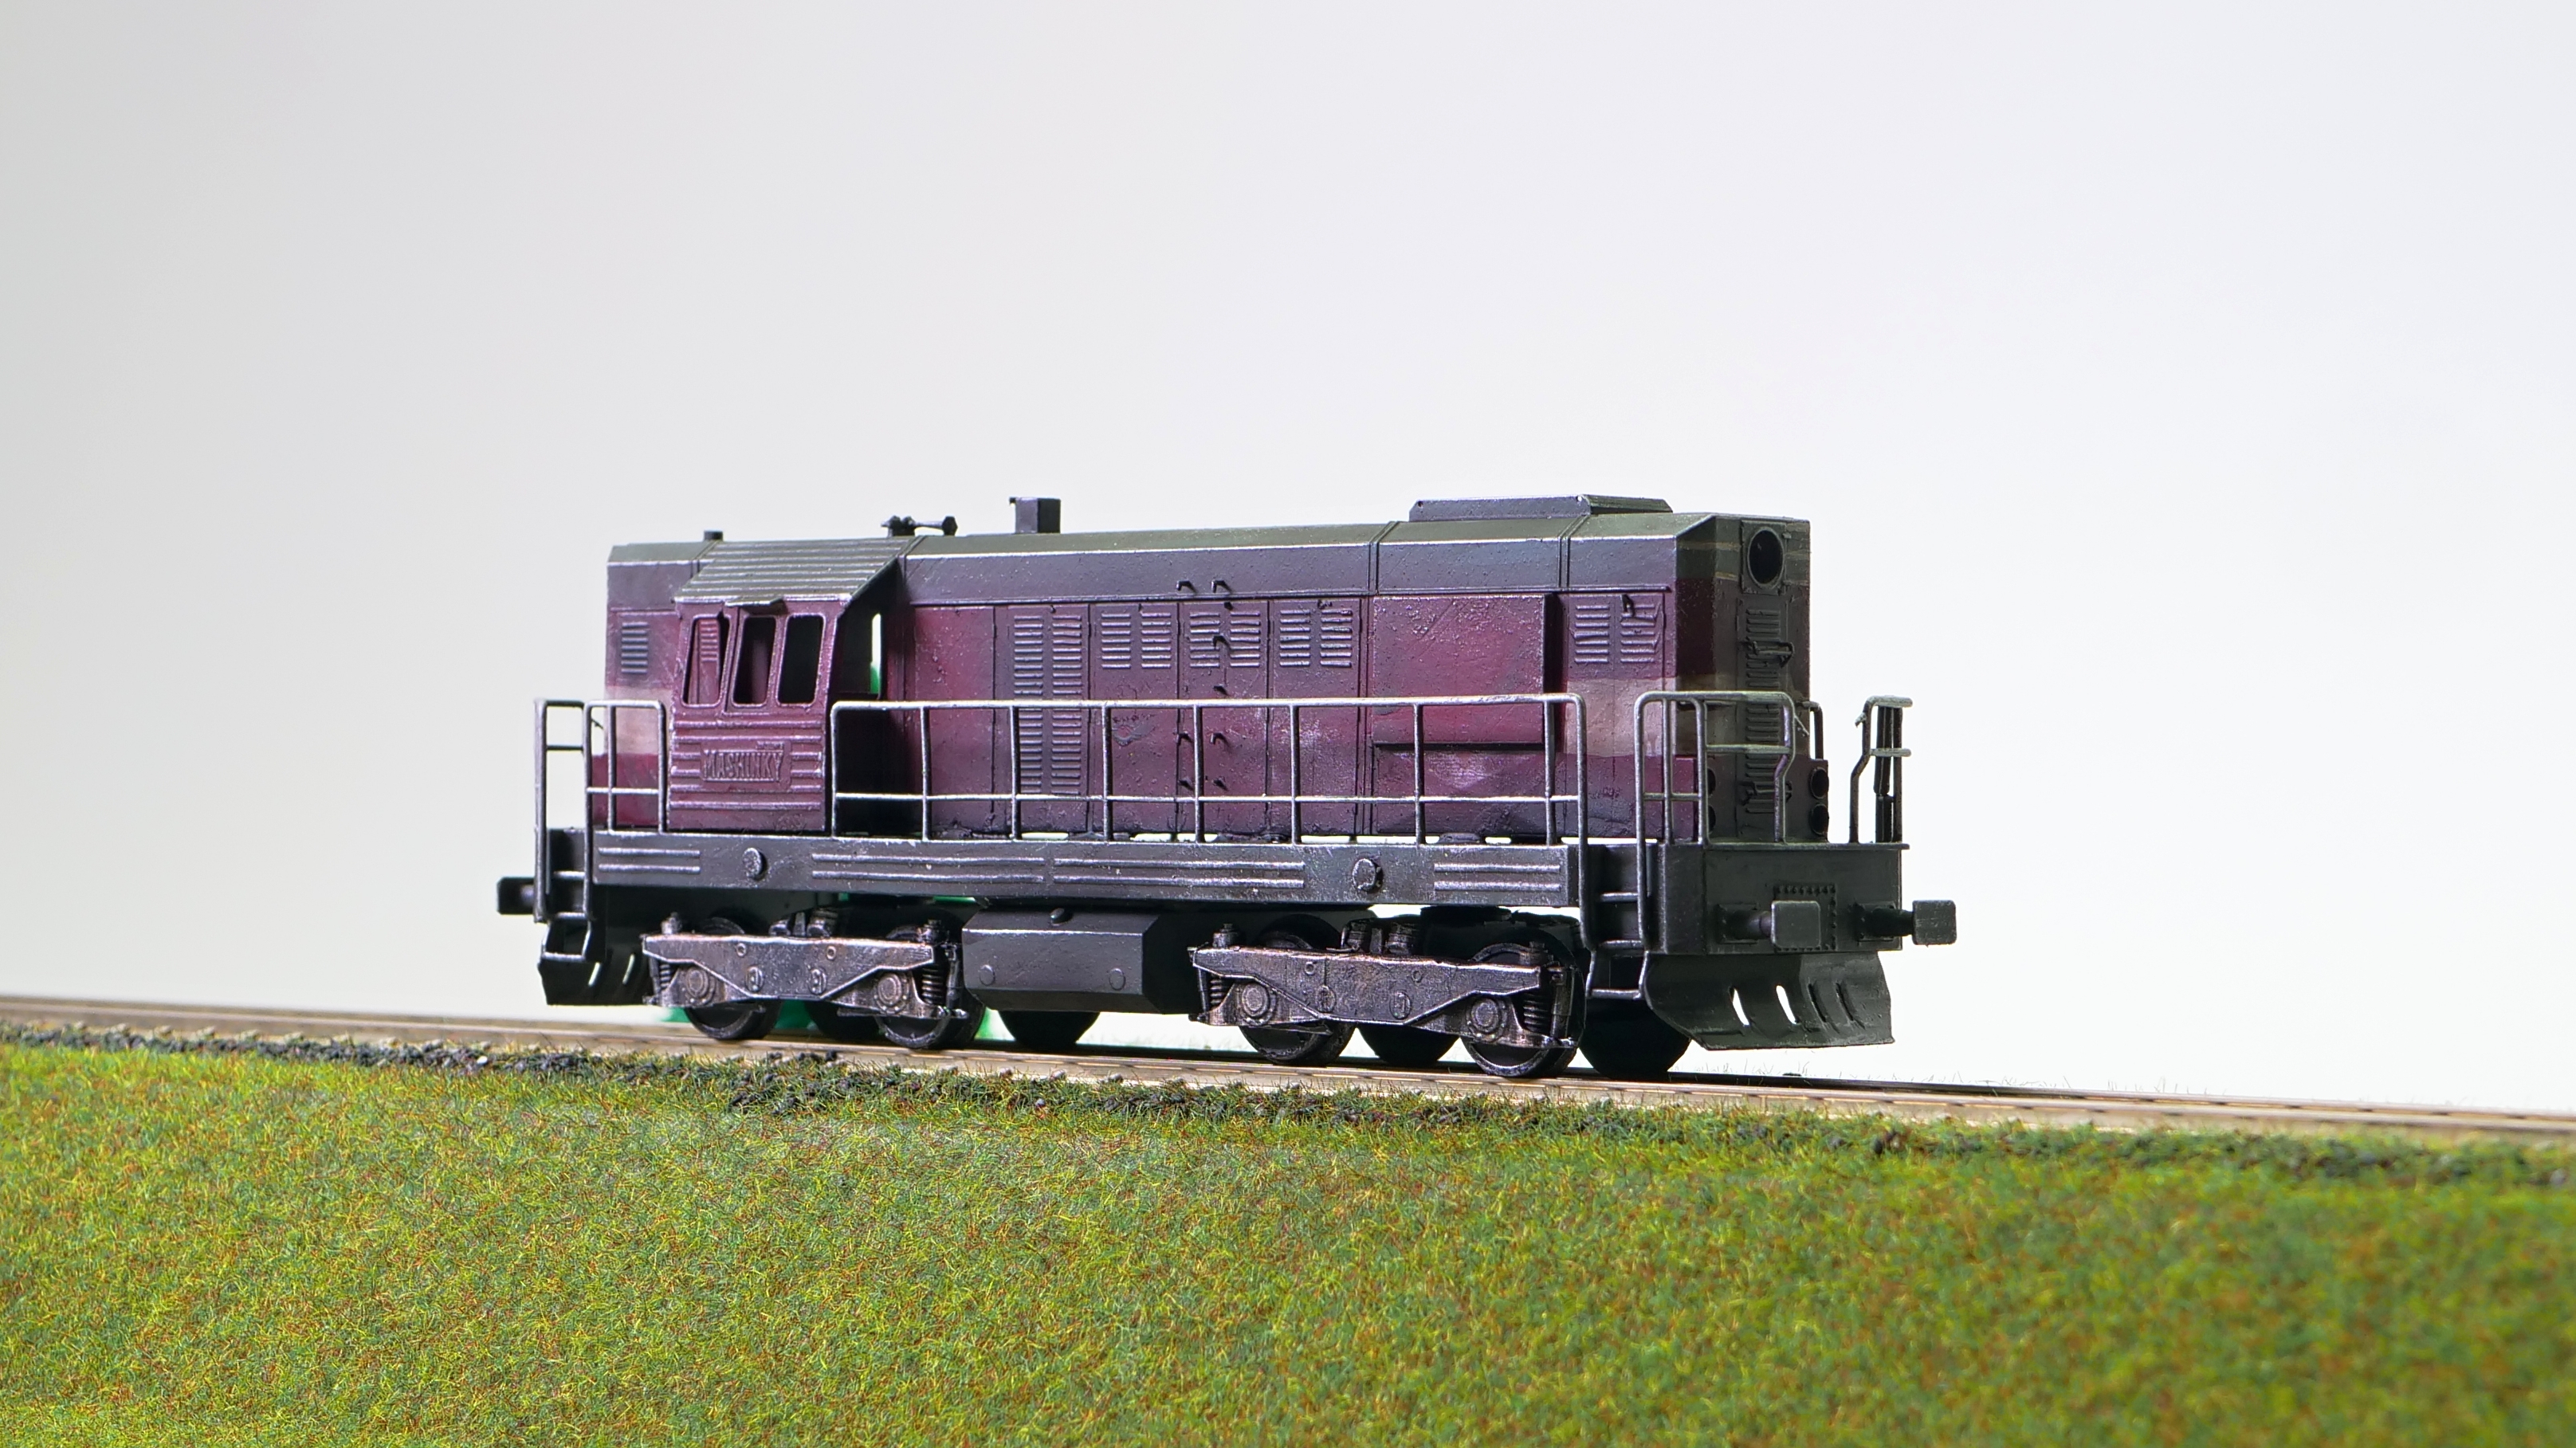 3d Printed Railway Models Part Ii Trains And Buildings Prusa